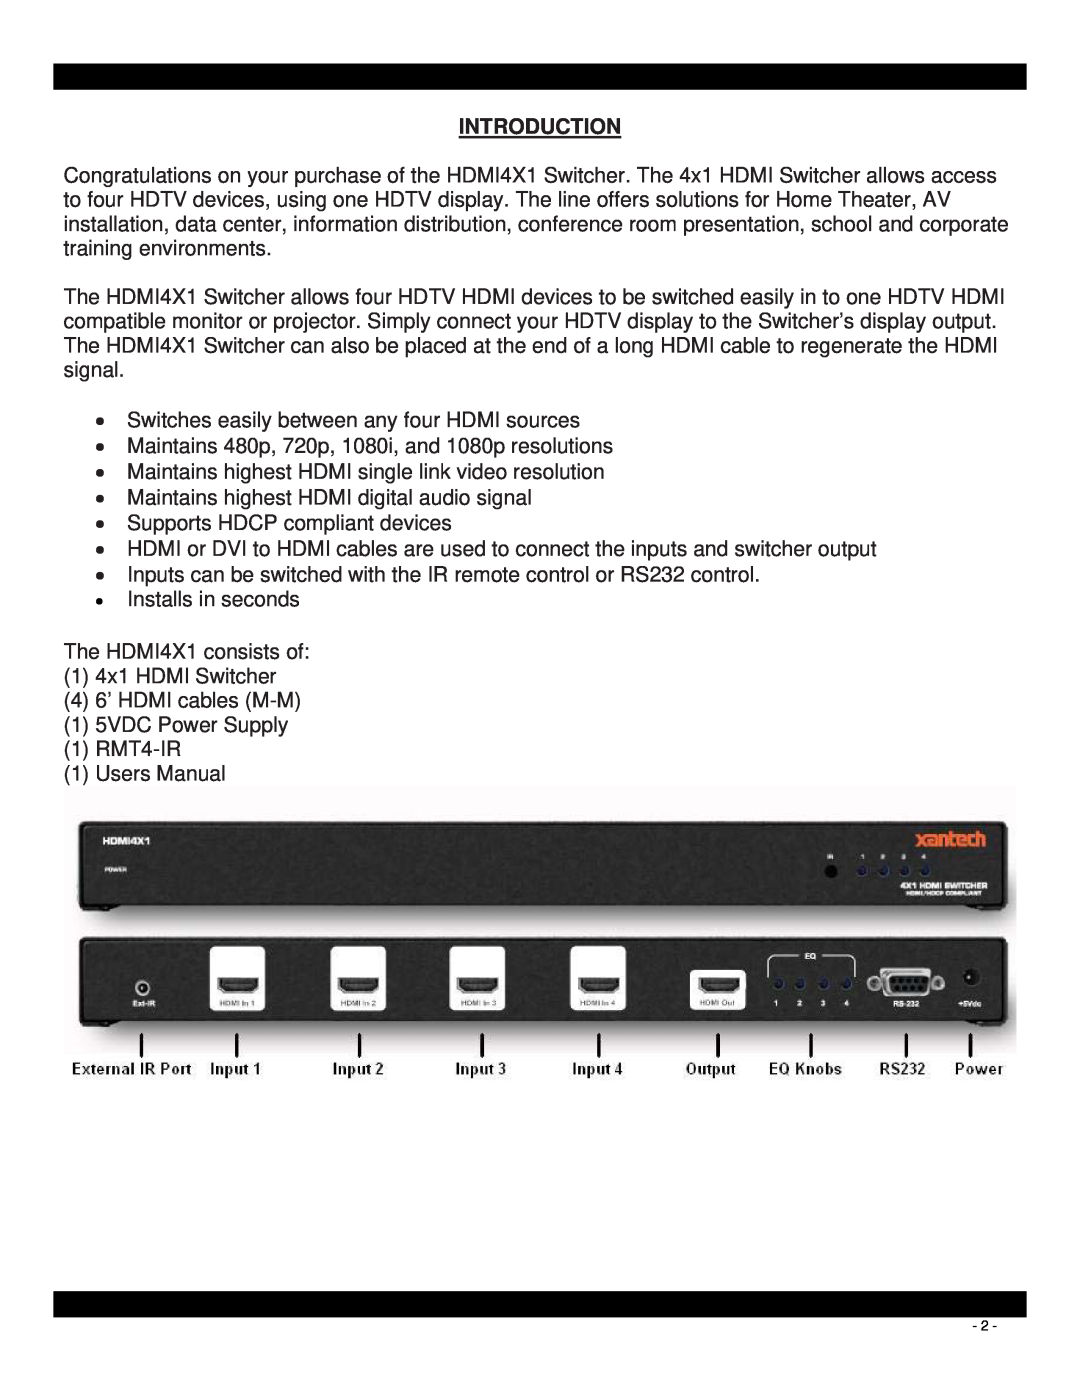 Xantech HDMI4X1 user manual Introduction 